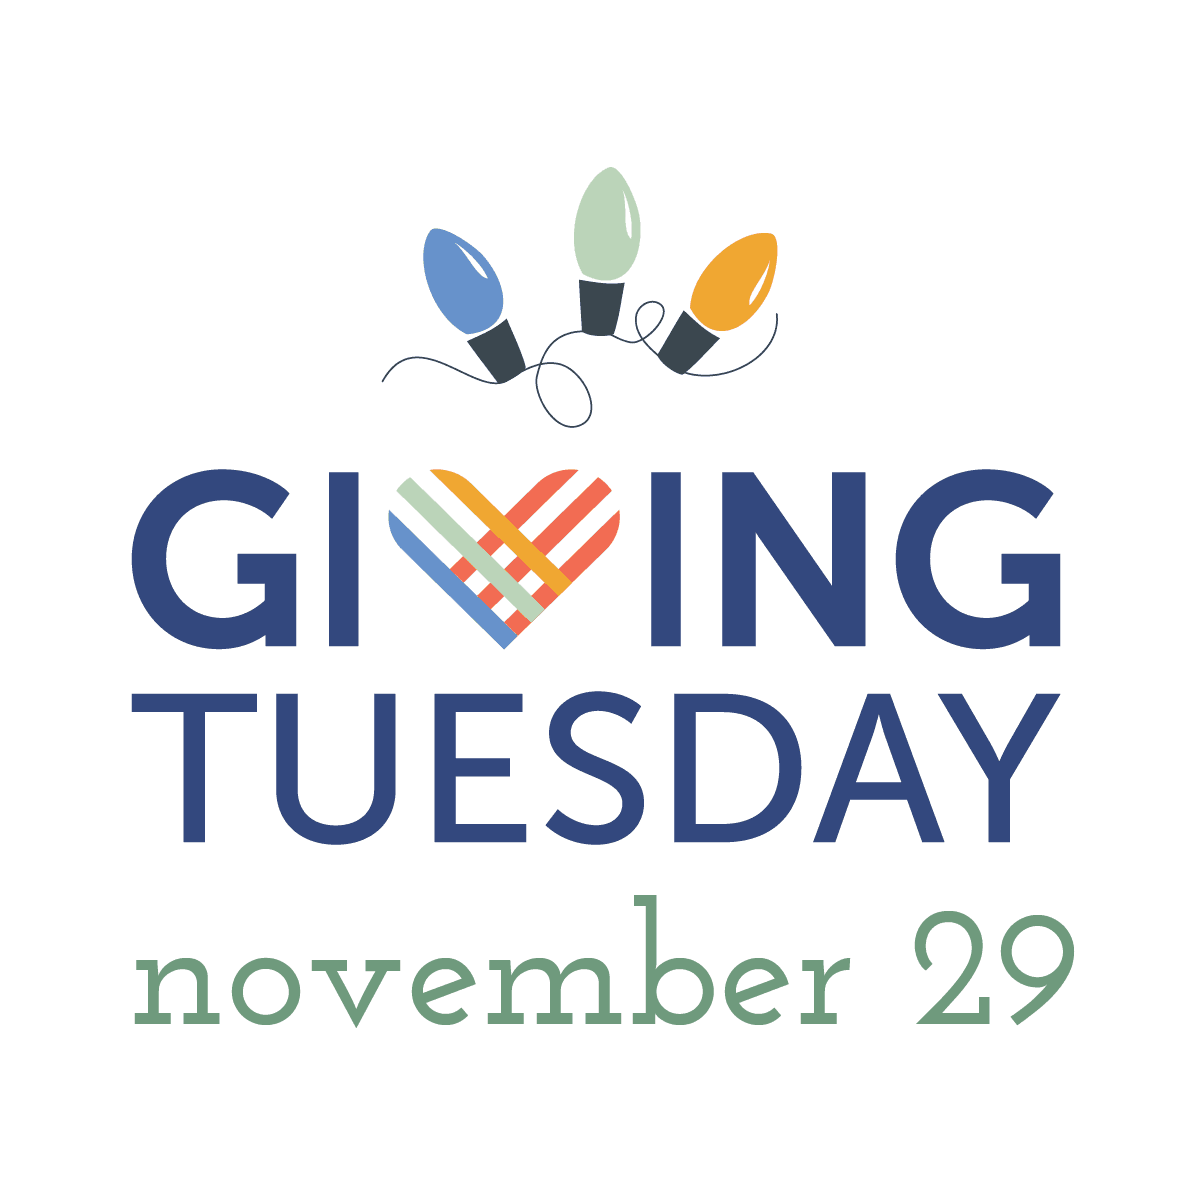 Celebrating Giving Tuesday